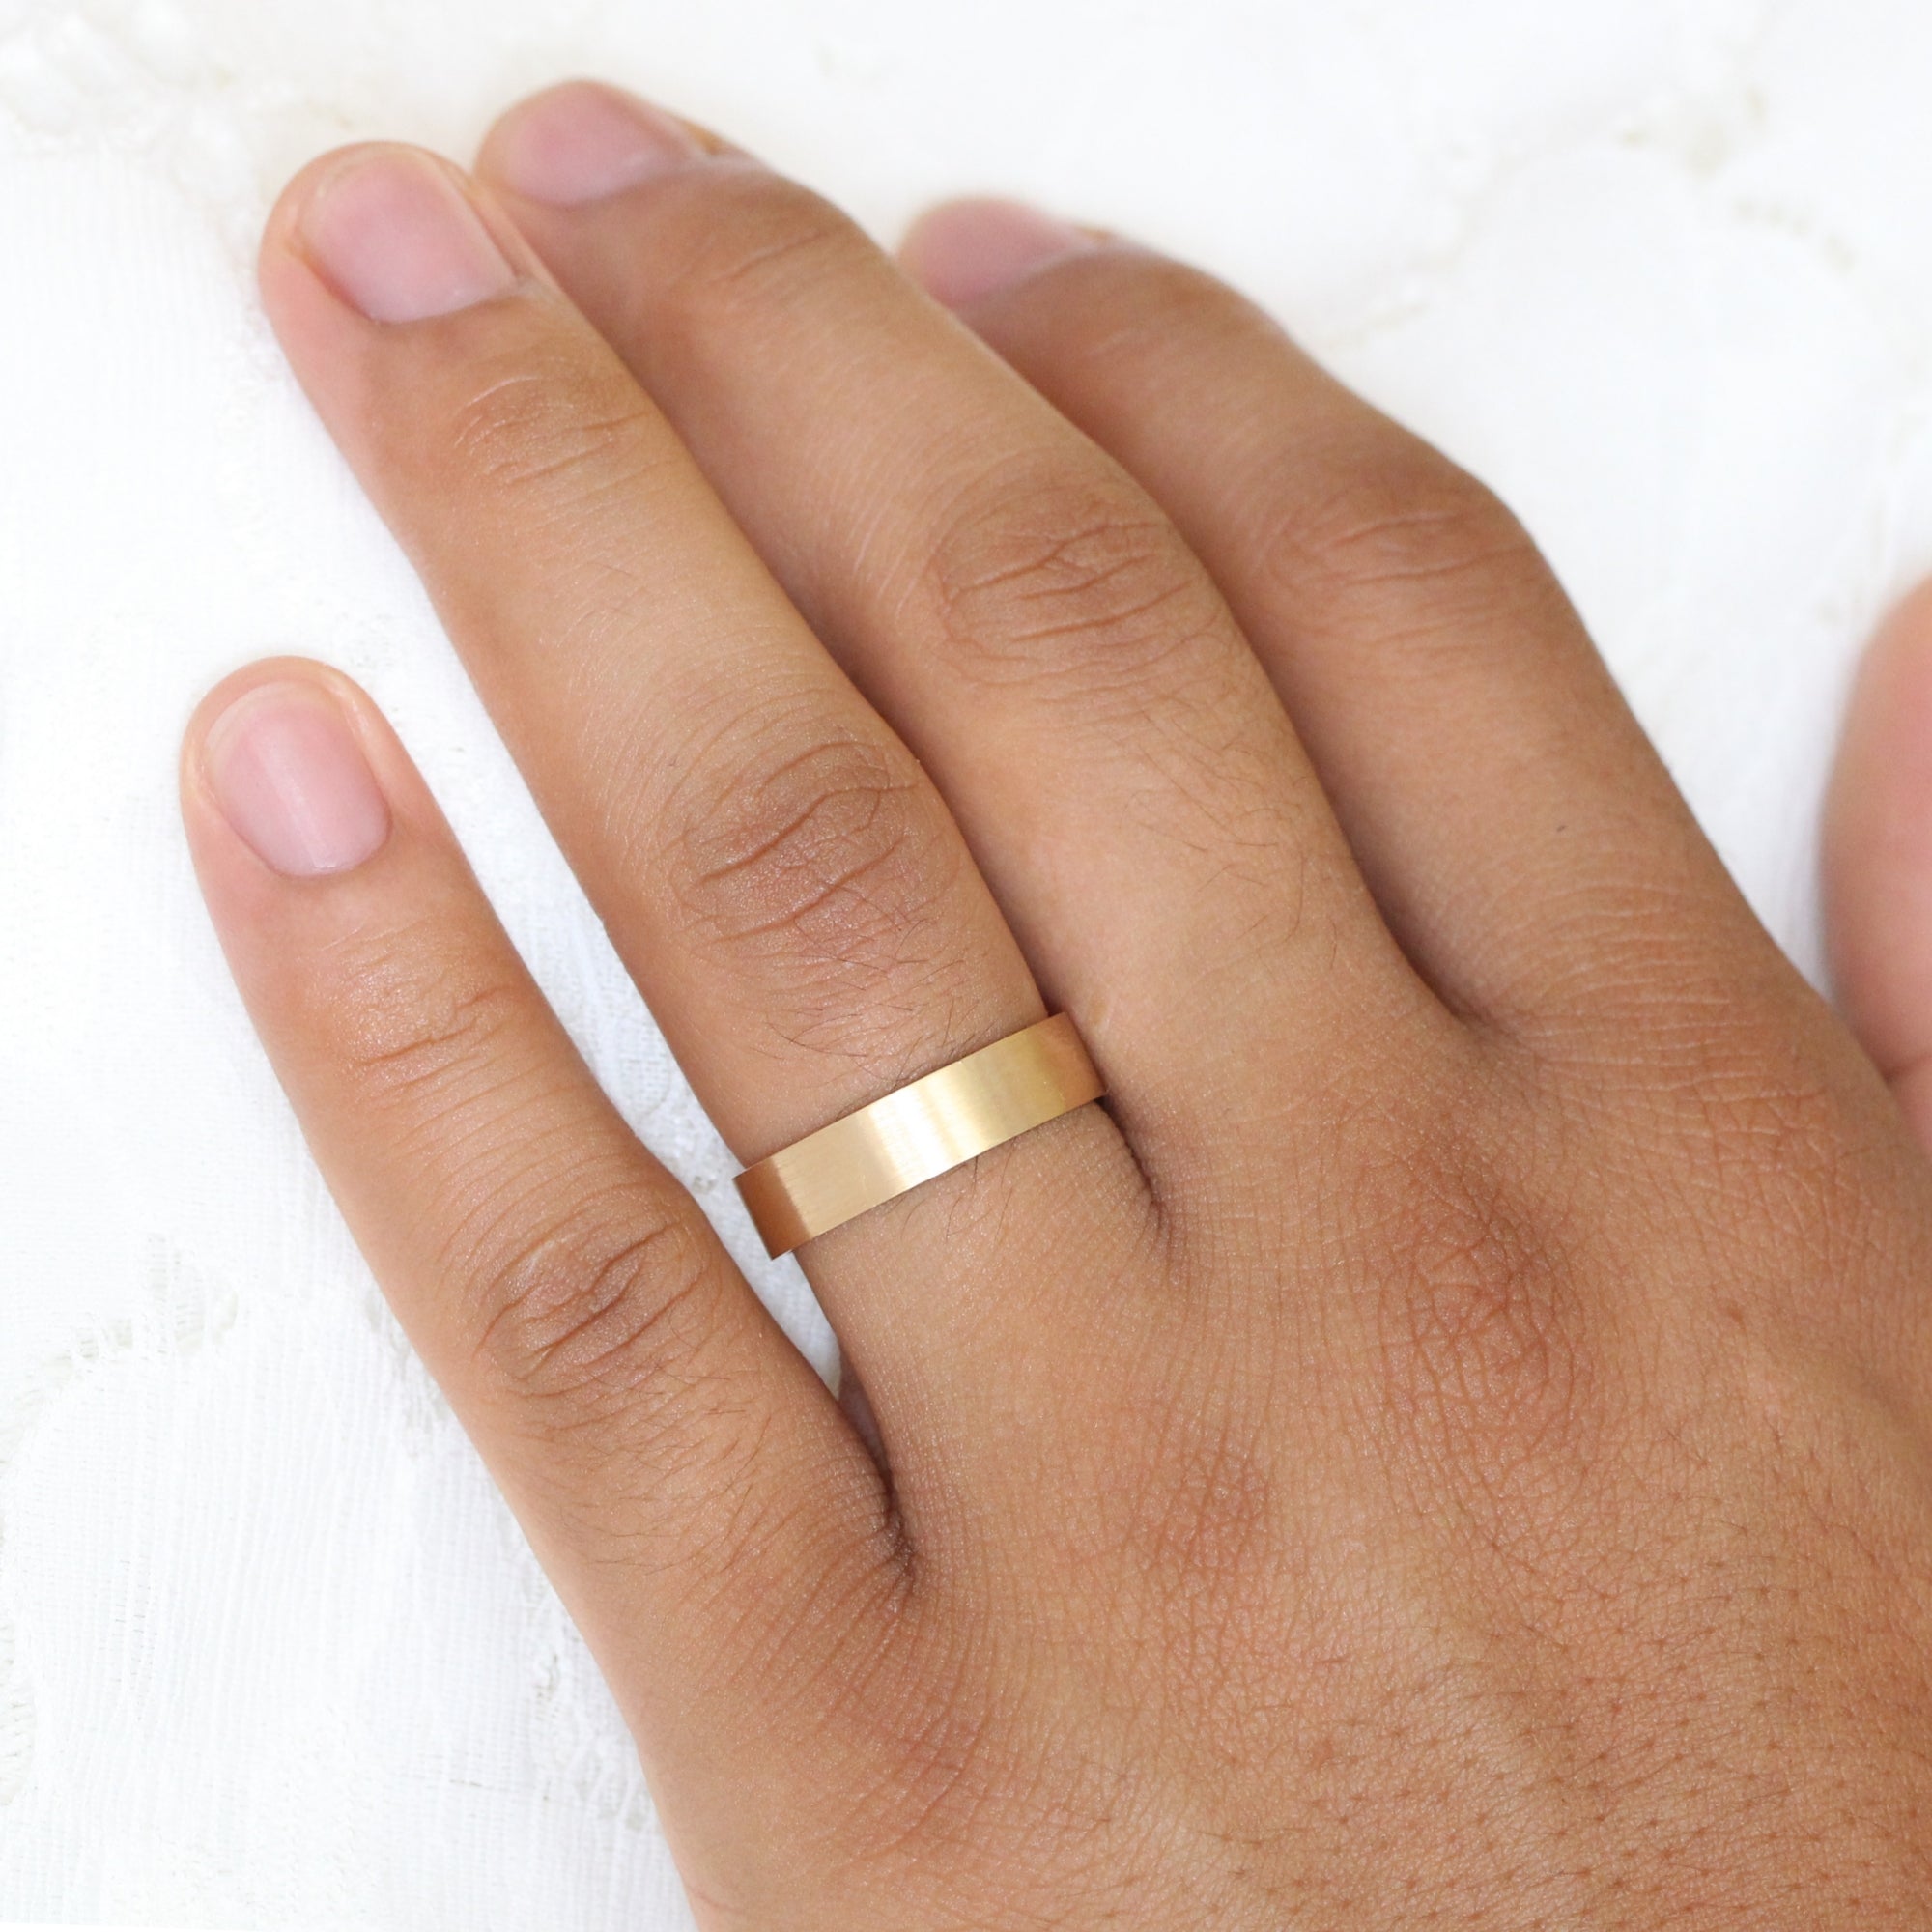 Mens wedding ring yellow gold flat wedding band matte finish gold ring la more design jewelry